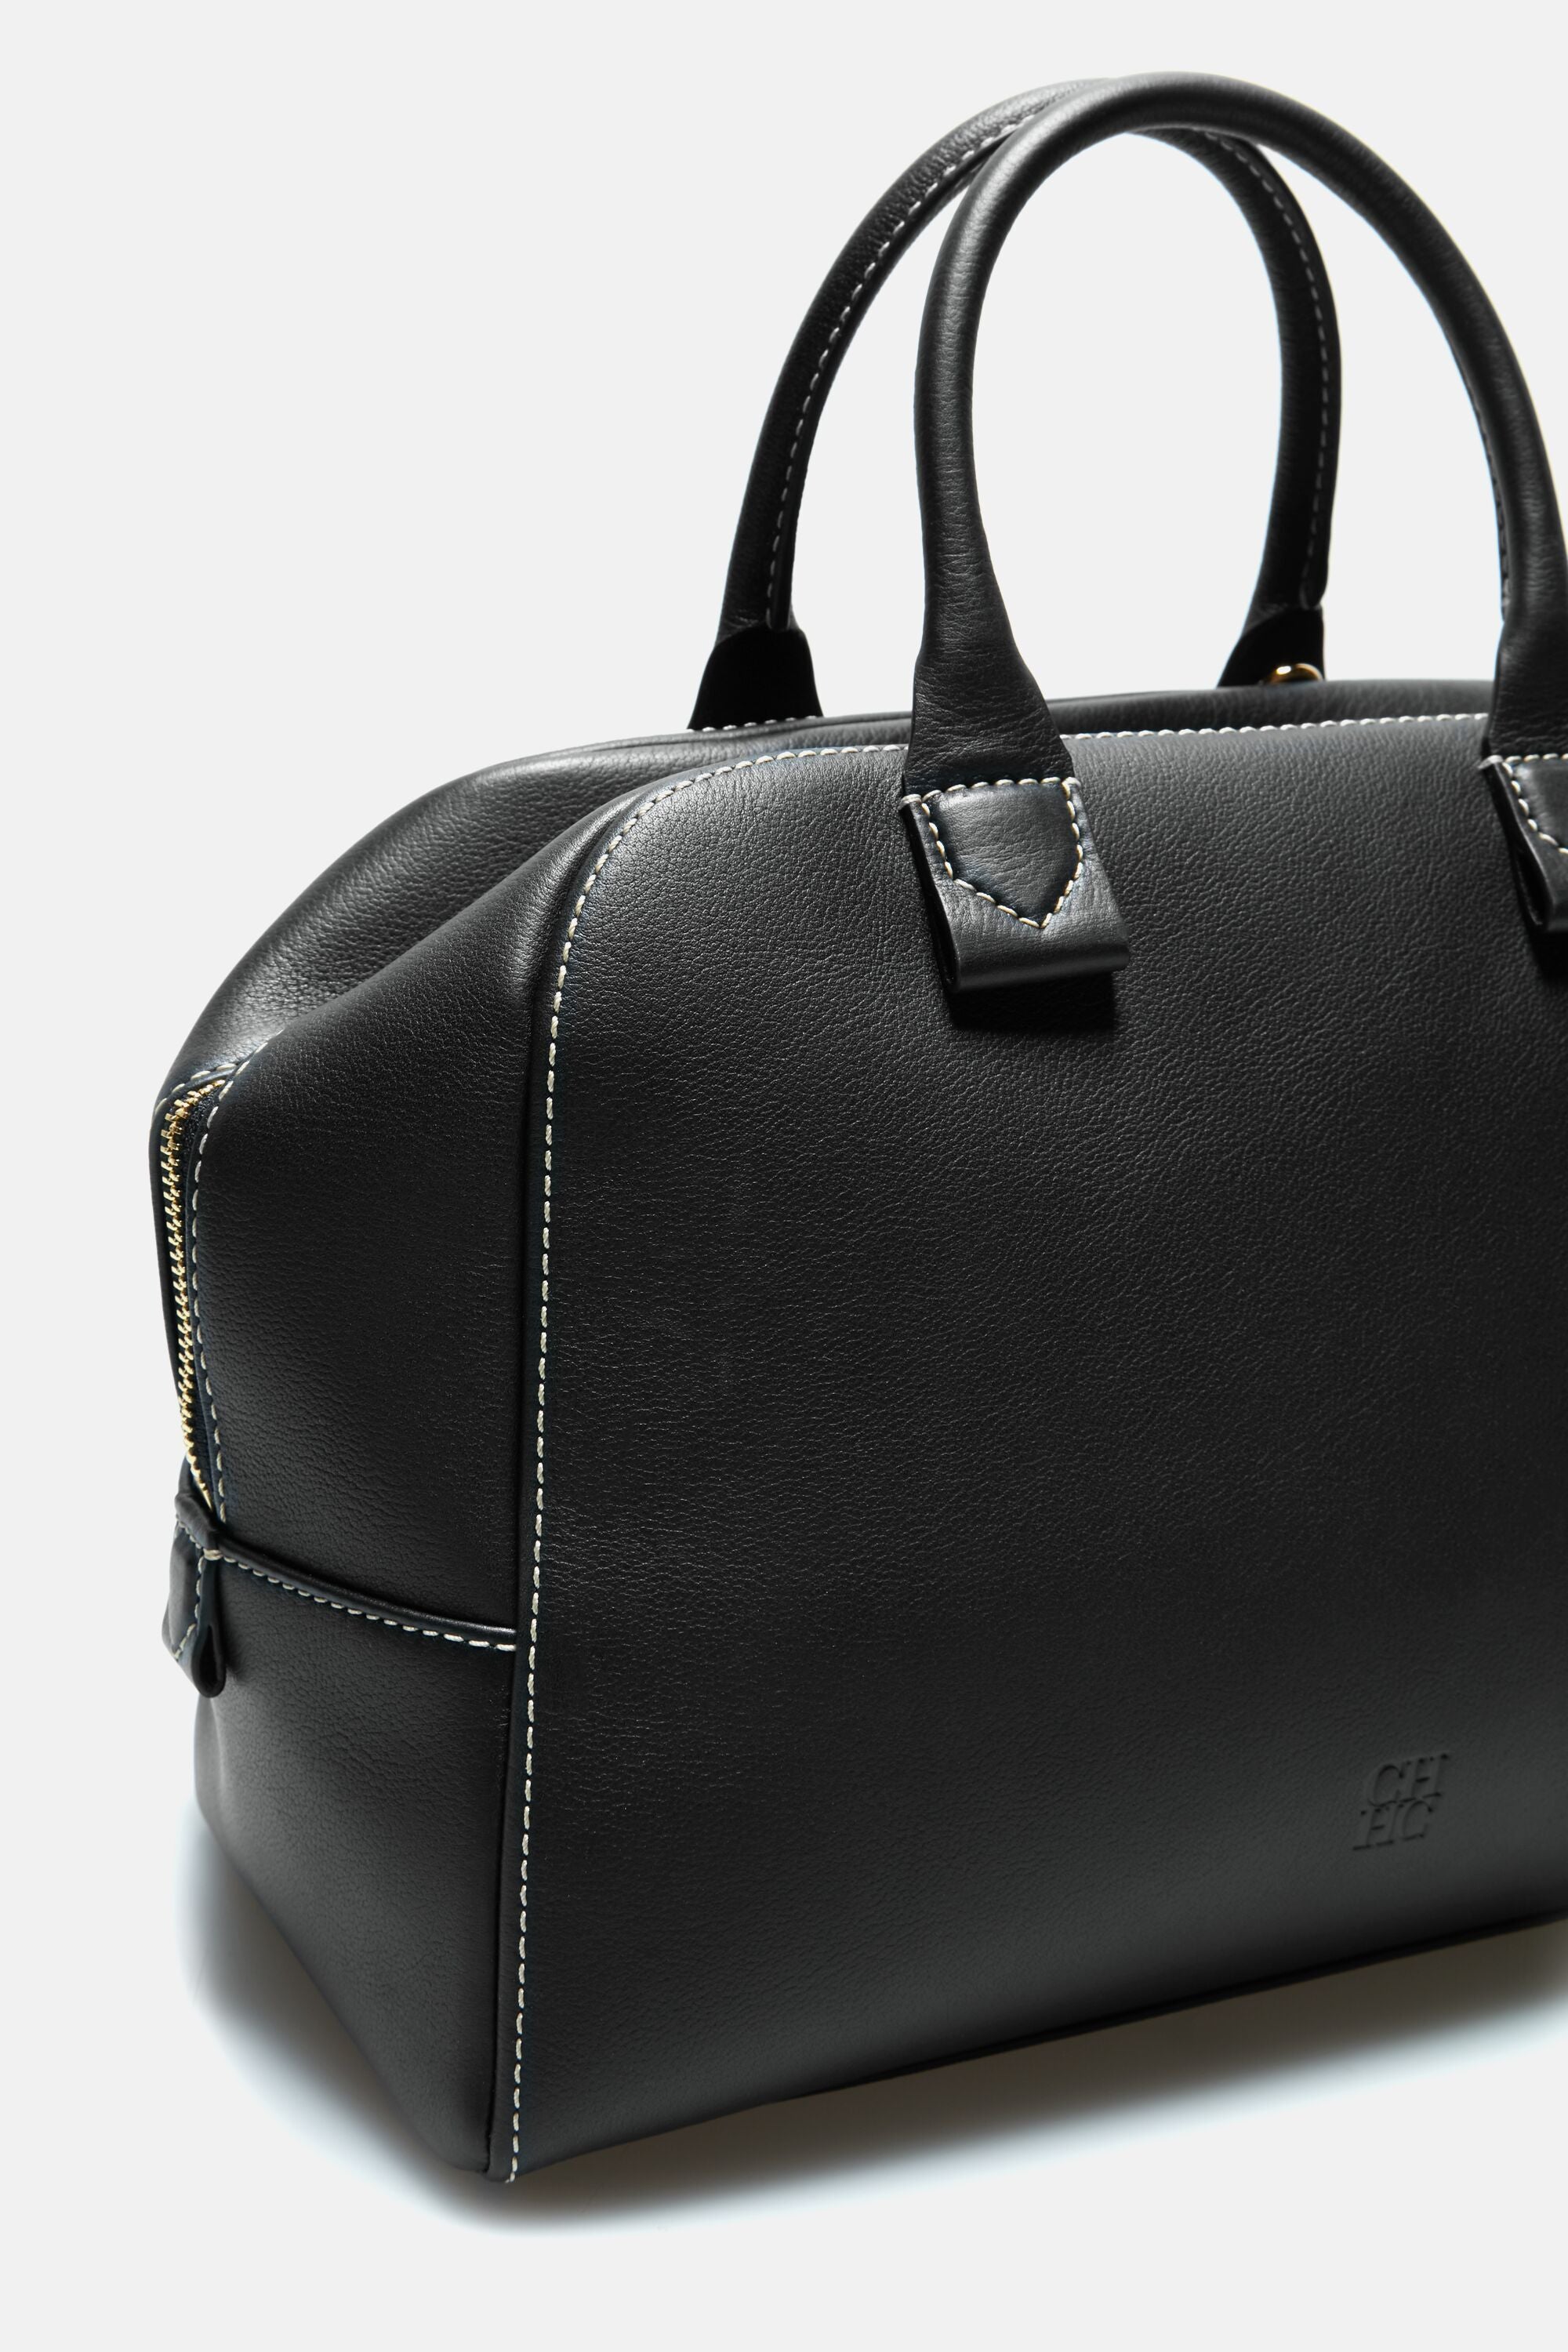 Blasón S | Medium handbag black - CH Carolina Herrera United States